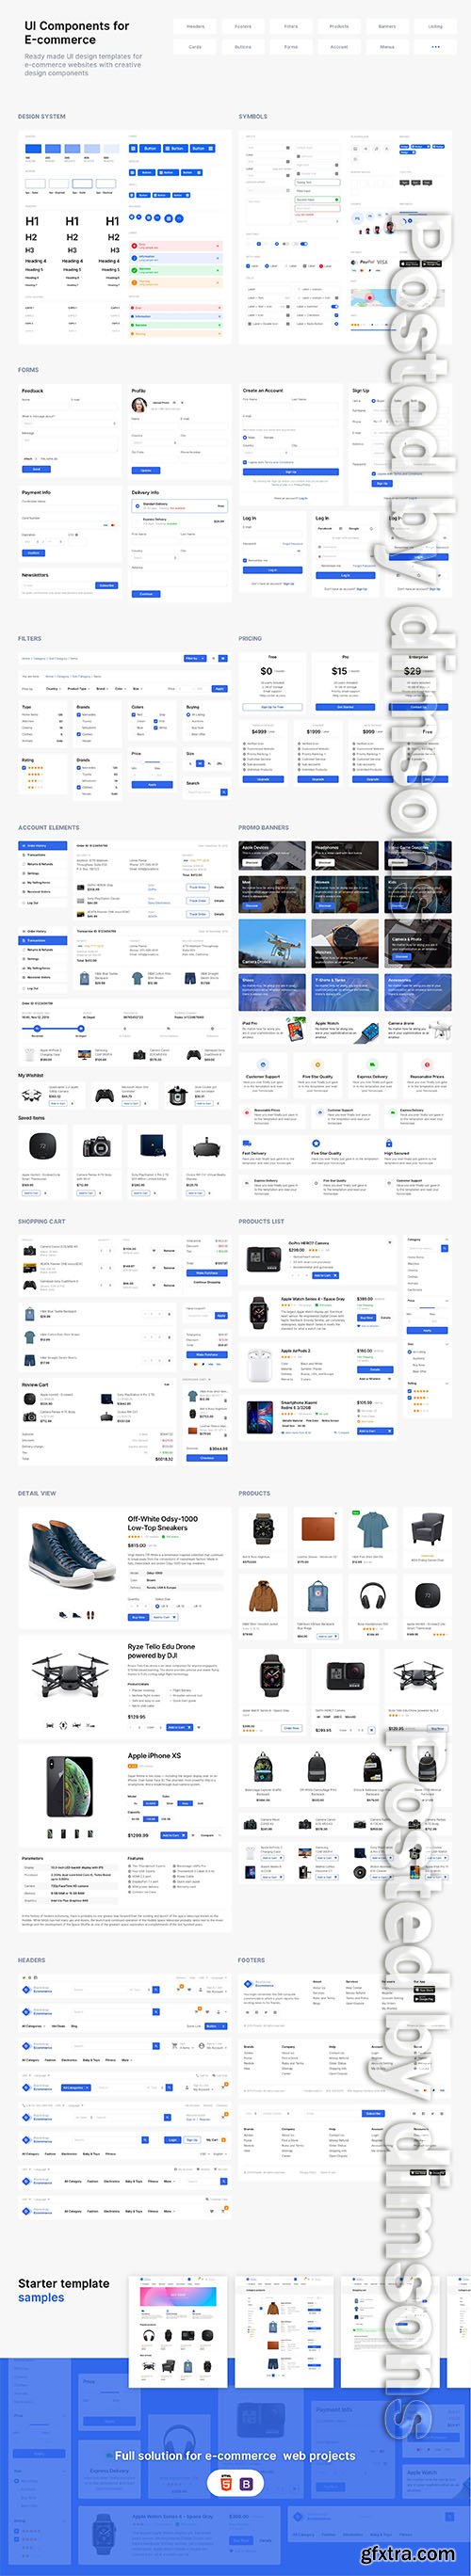 E-commerce Design System and UI kit